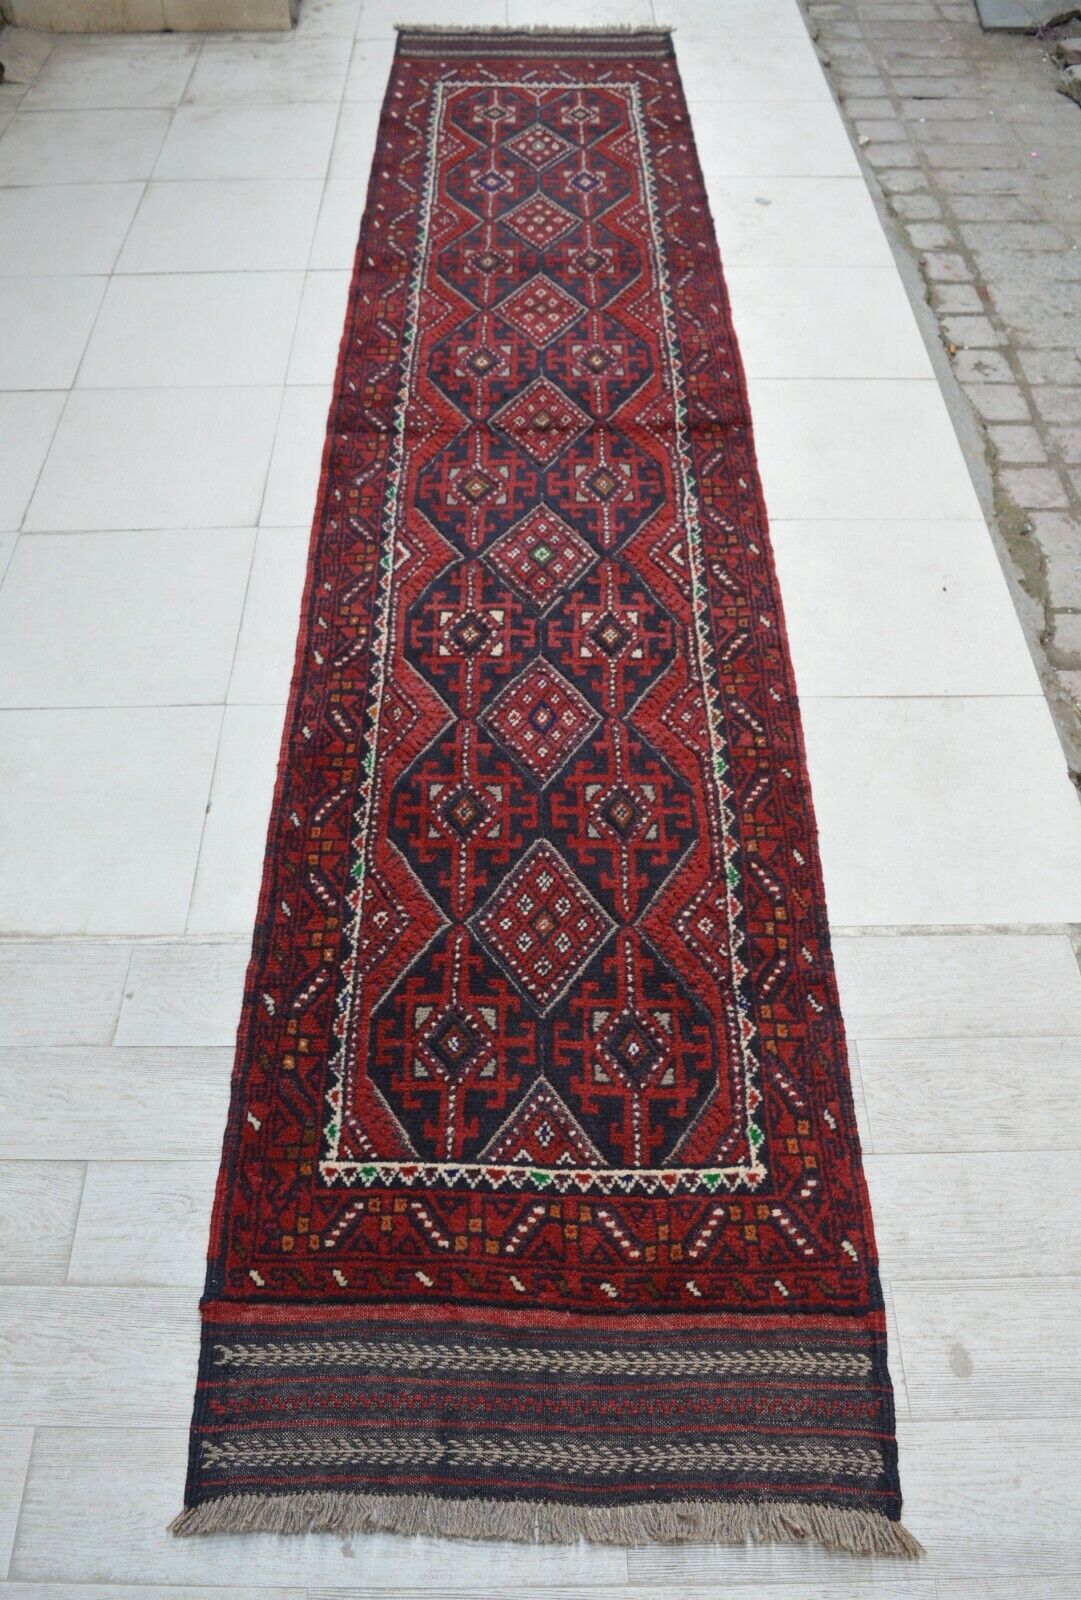 2'5 x 11'6 Handmade afghan tribal mushvani wool long runner rug, hallway runner